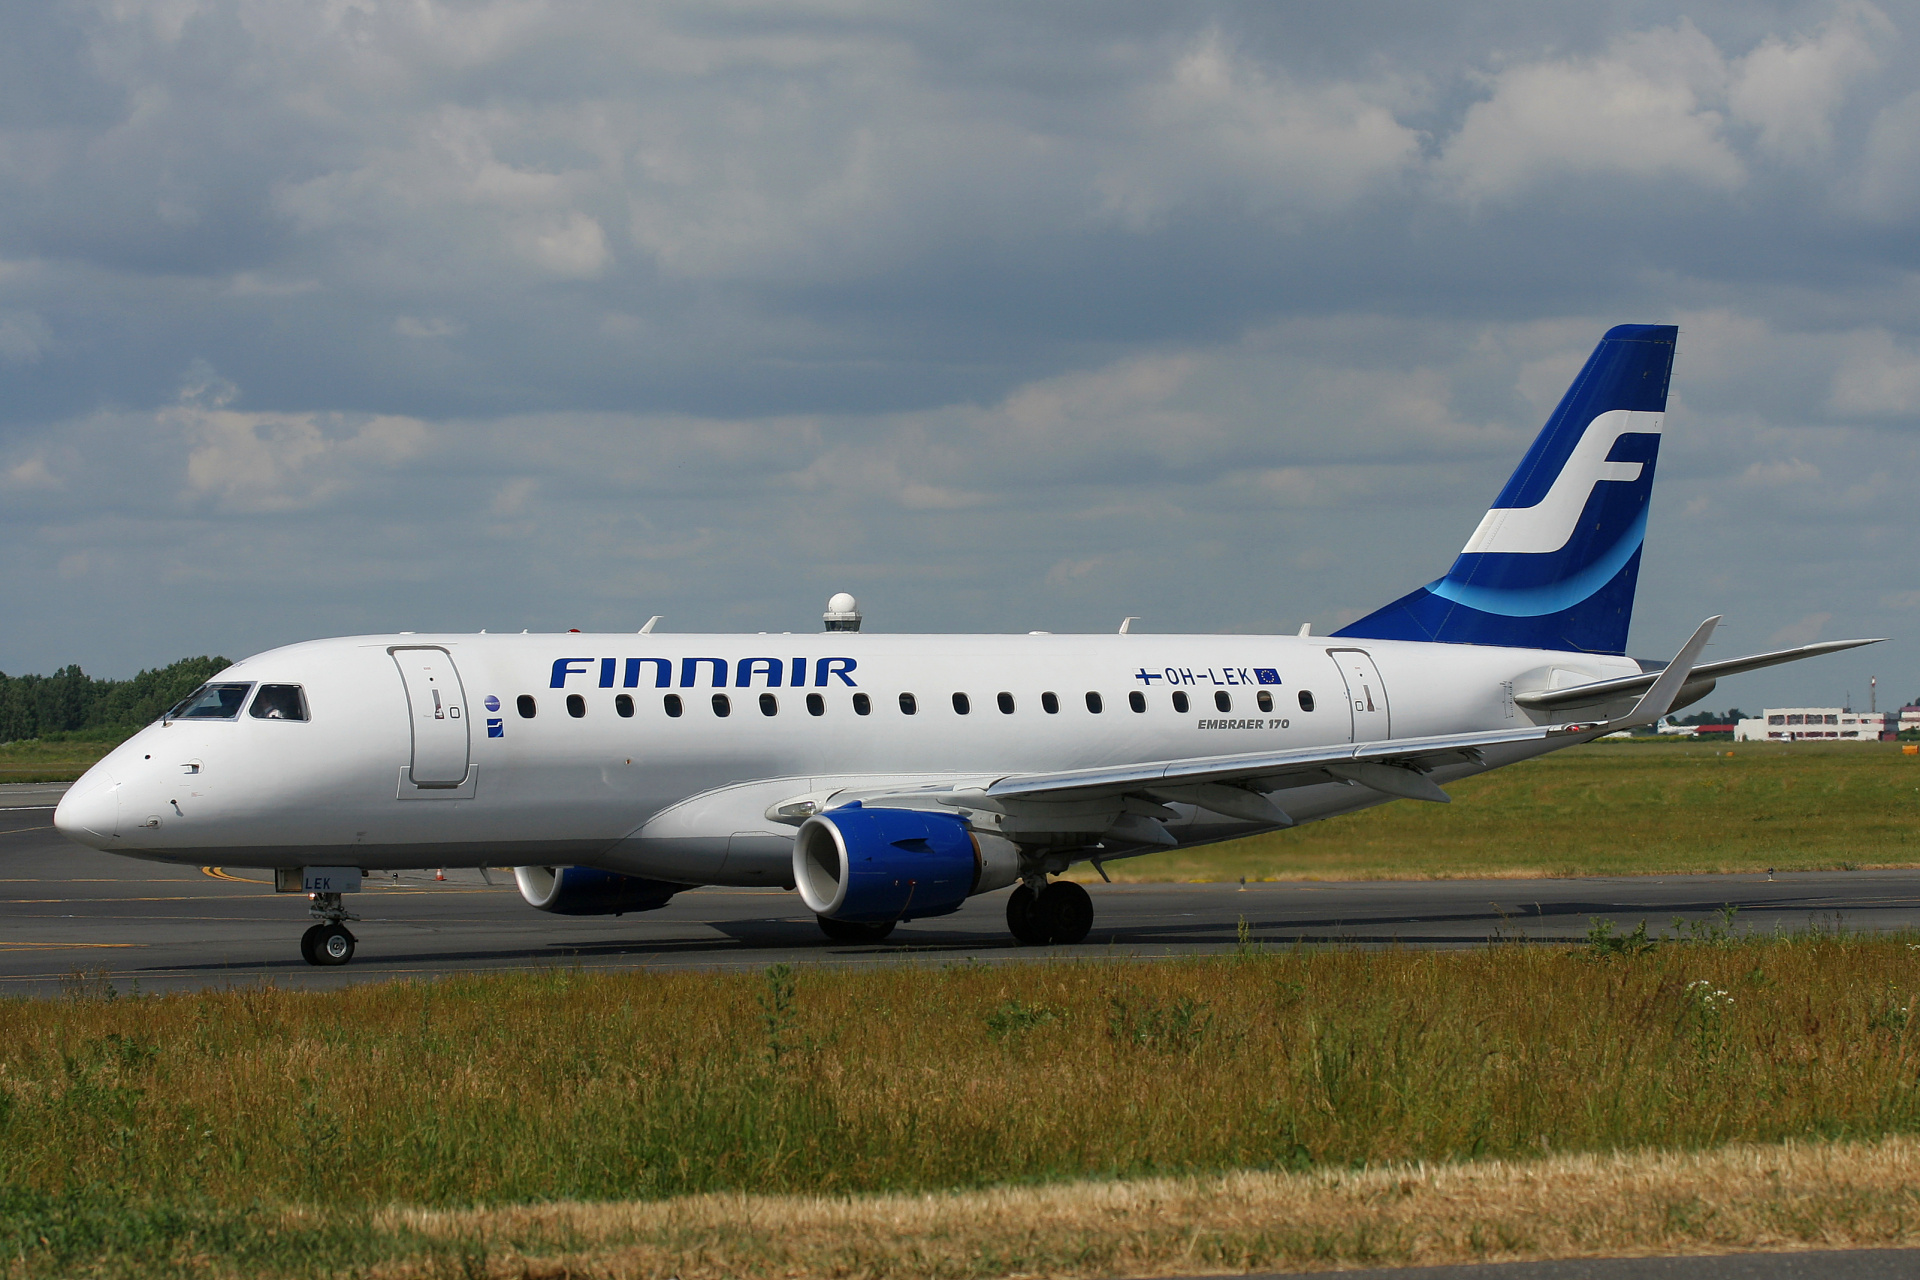 OH-LEK (Aircraft » EPWA Spotting » Embraer E170 » Finnair)